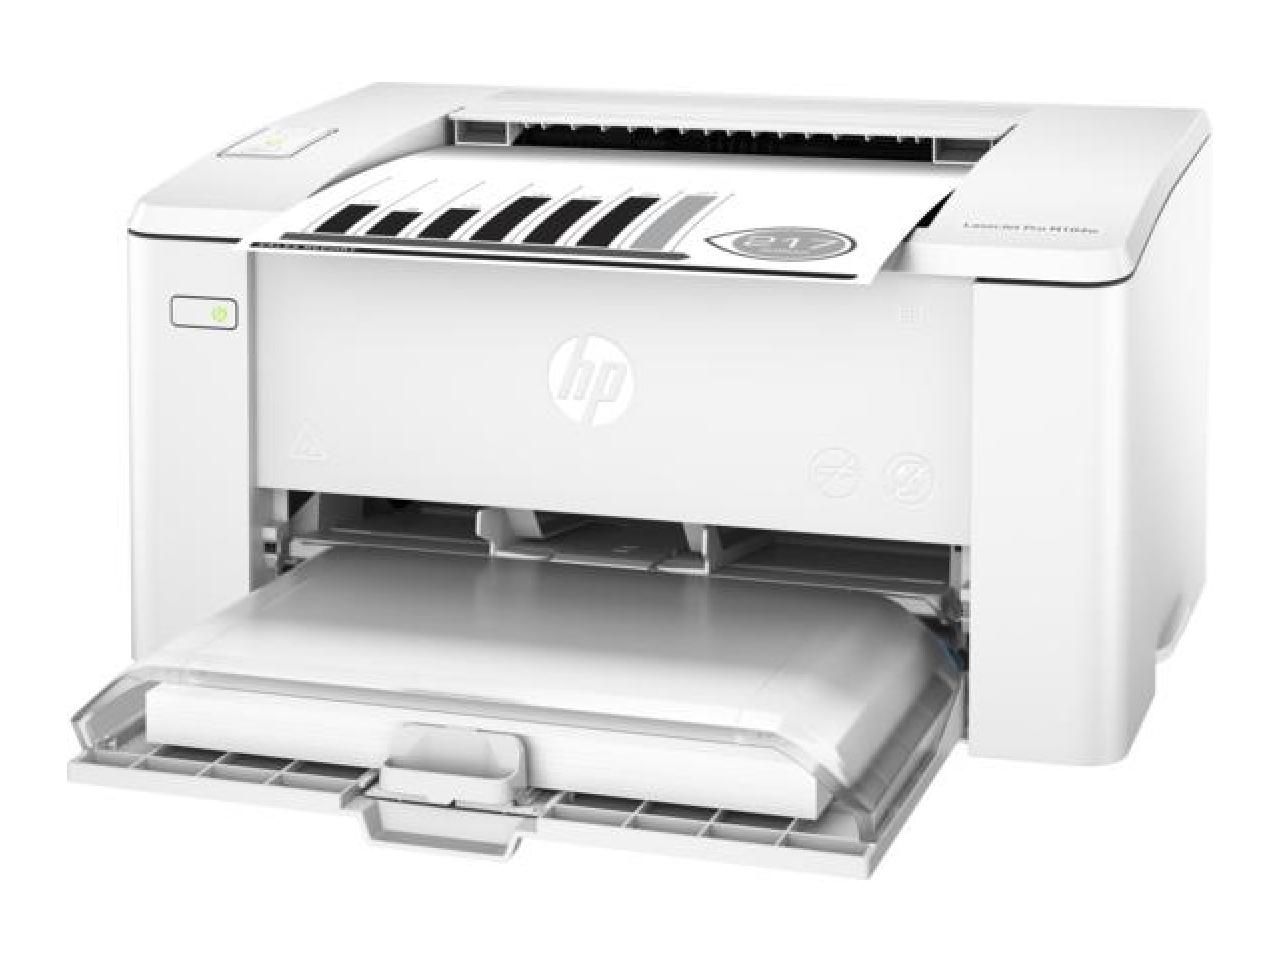 Driver da Impressora HP LaserJet Pro M104W